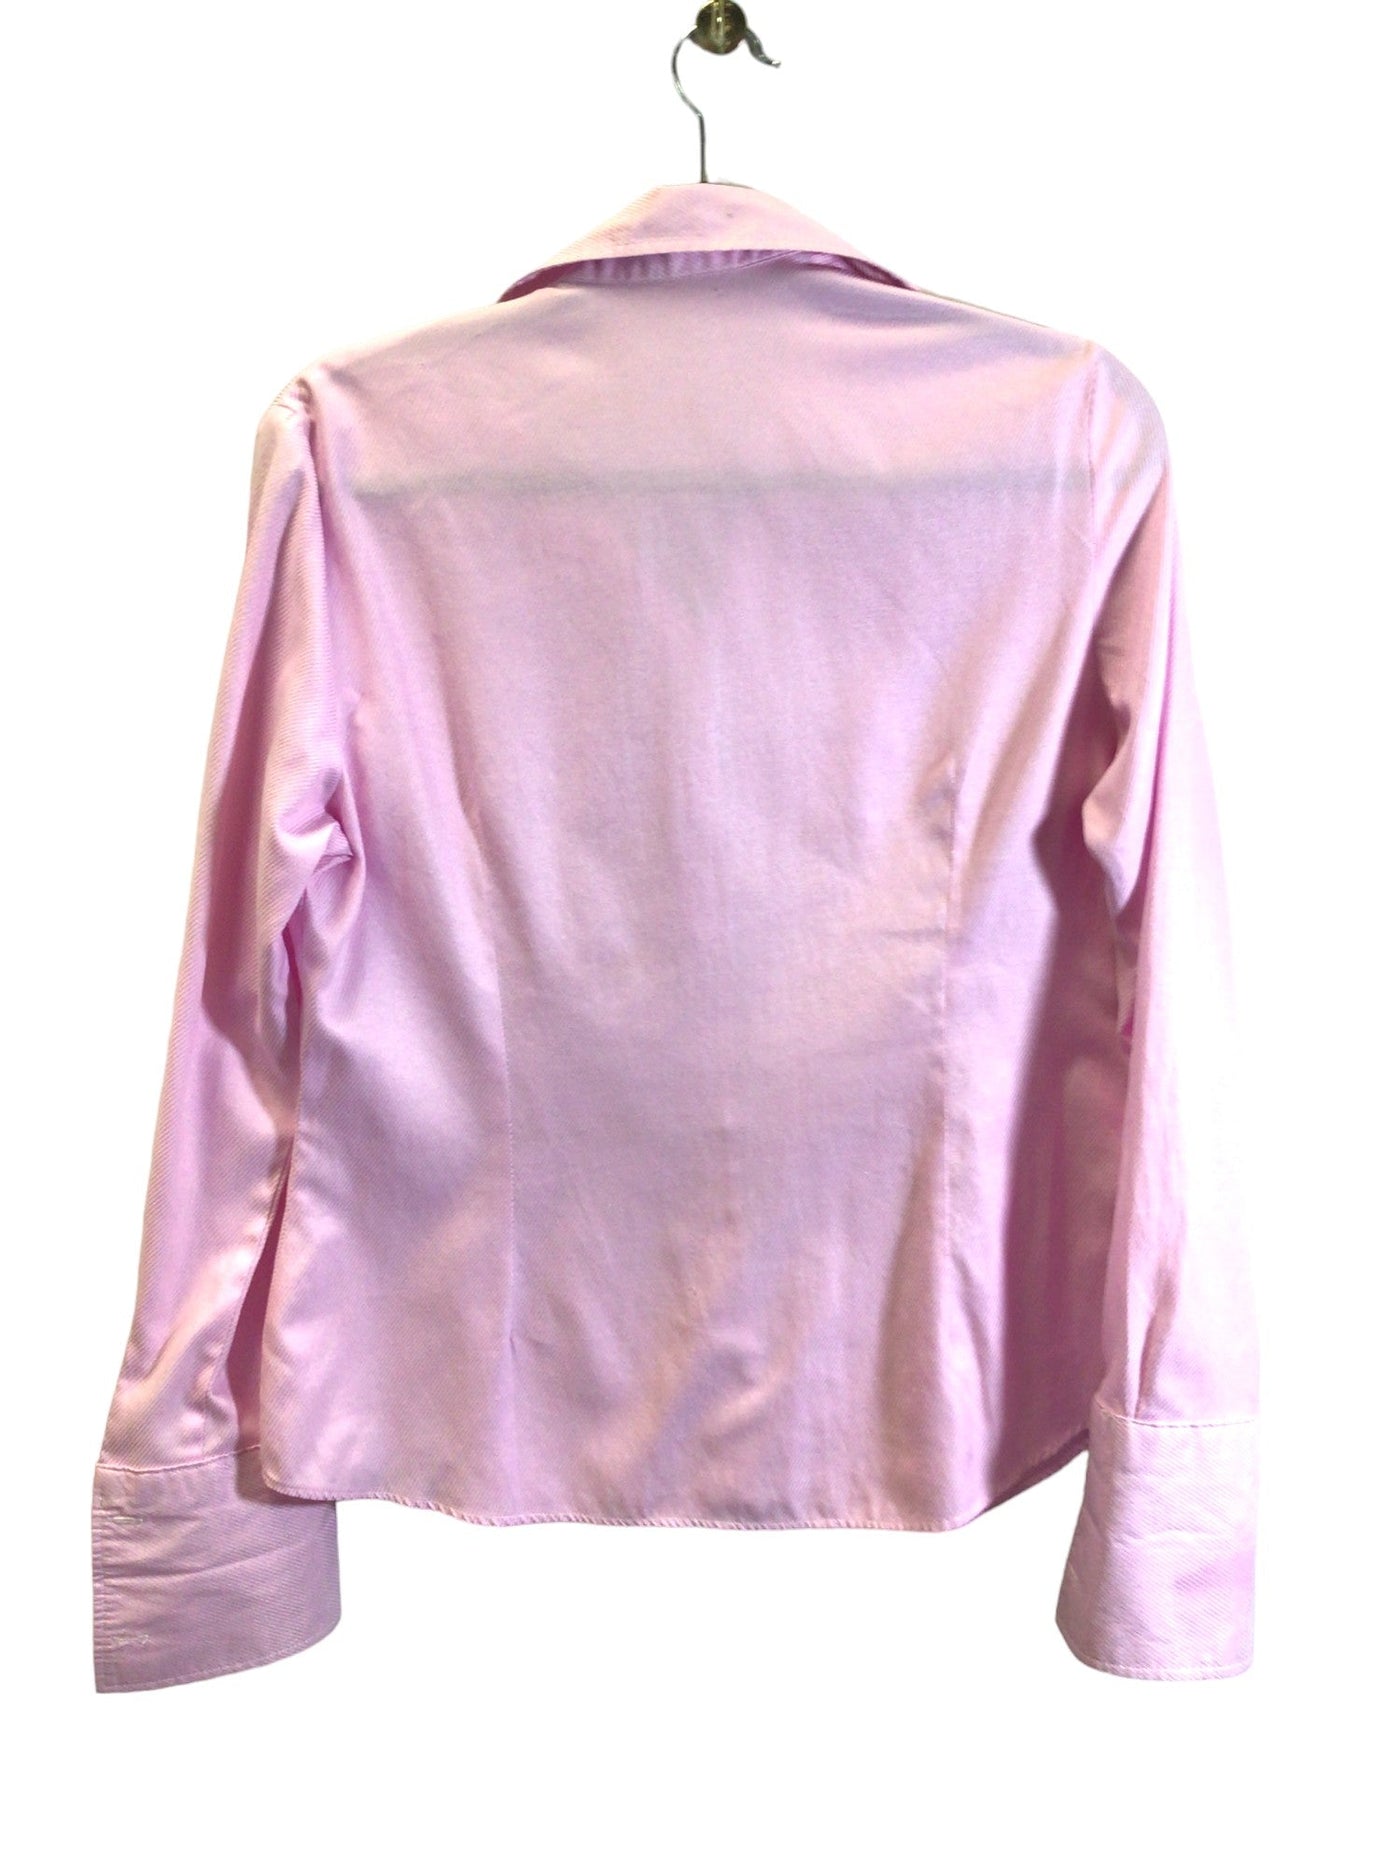 UNBRANDED Women Button Down Tops Regular fit in Pink - Size S | 9.99 $ KOOP